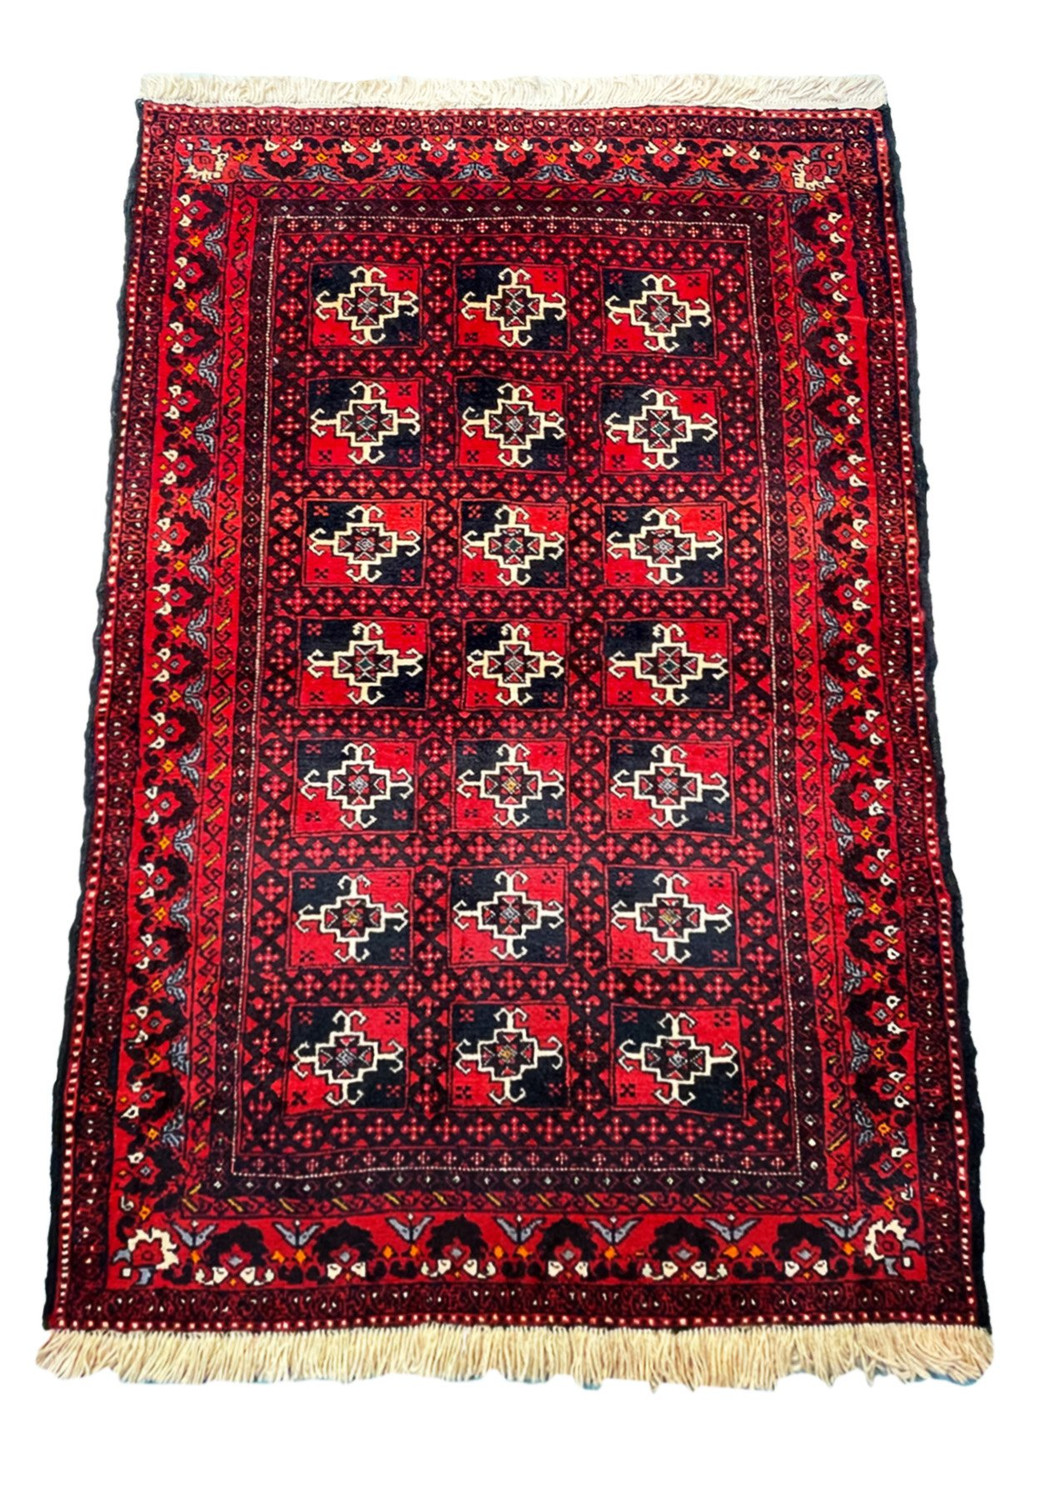 3'2" x 4'9" Persian Baluch Tribal Rug